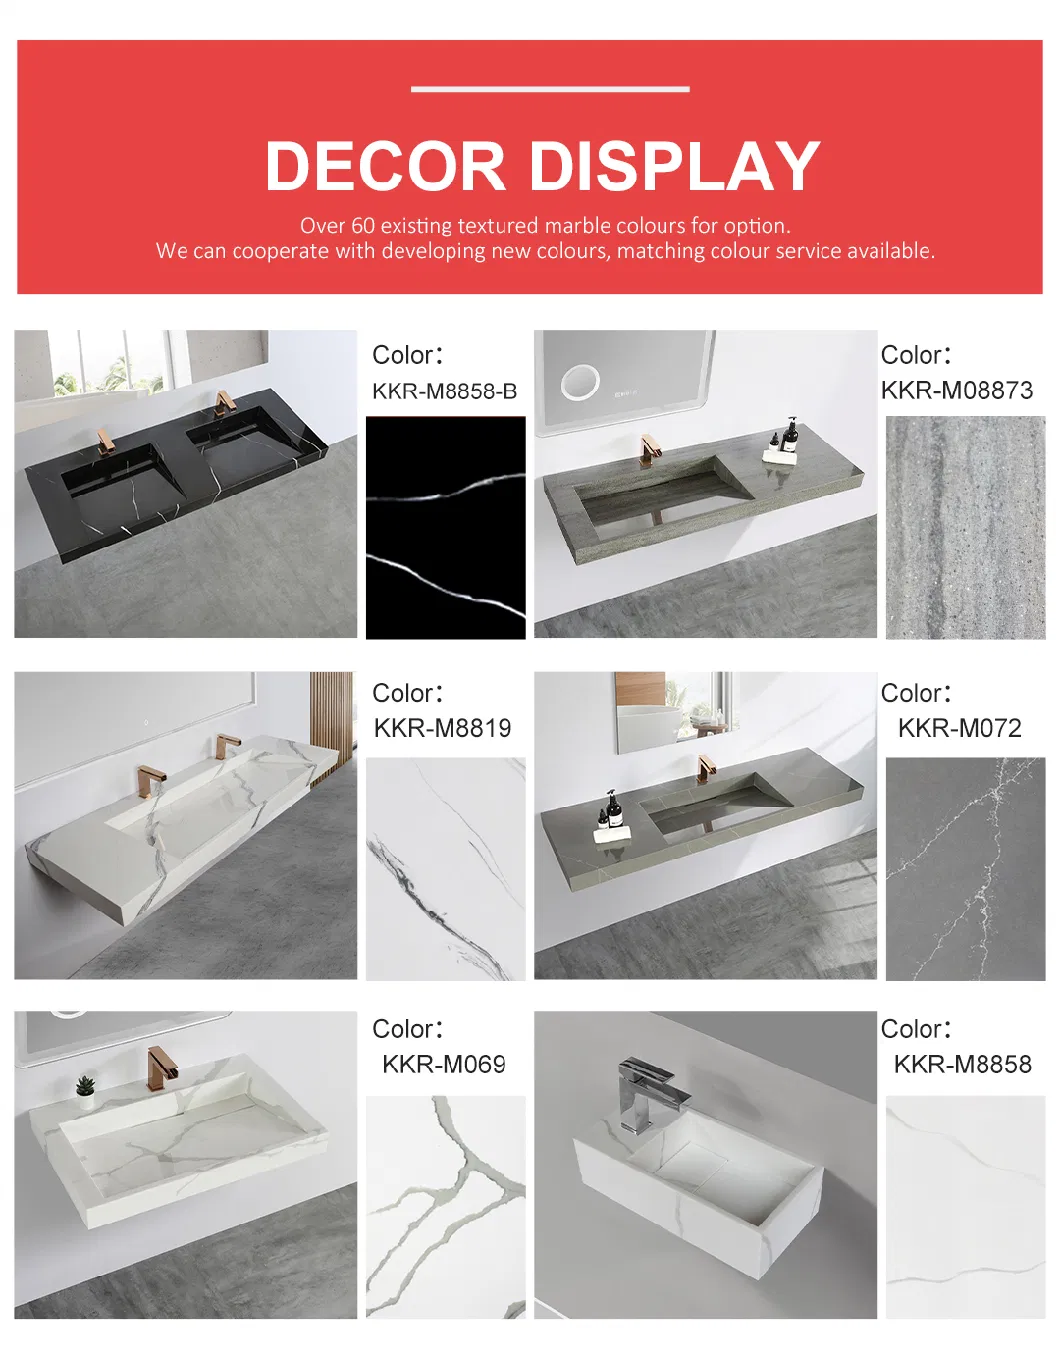 Sanitaryware Stone Vanity Integrated Bathroom Sink and Countertop Hotel Cabinet Wash Basin